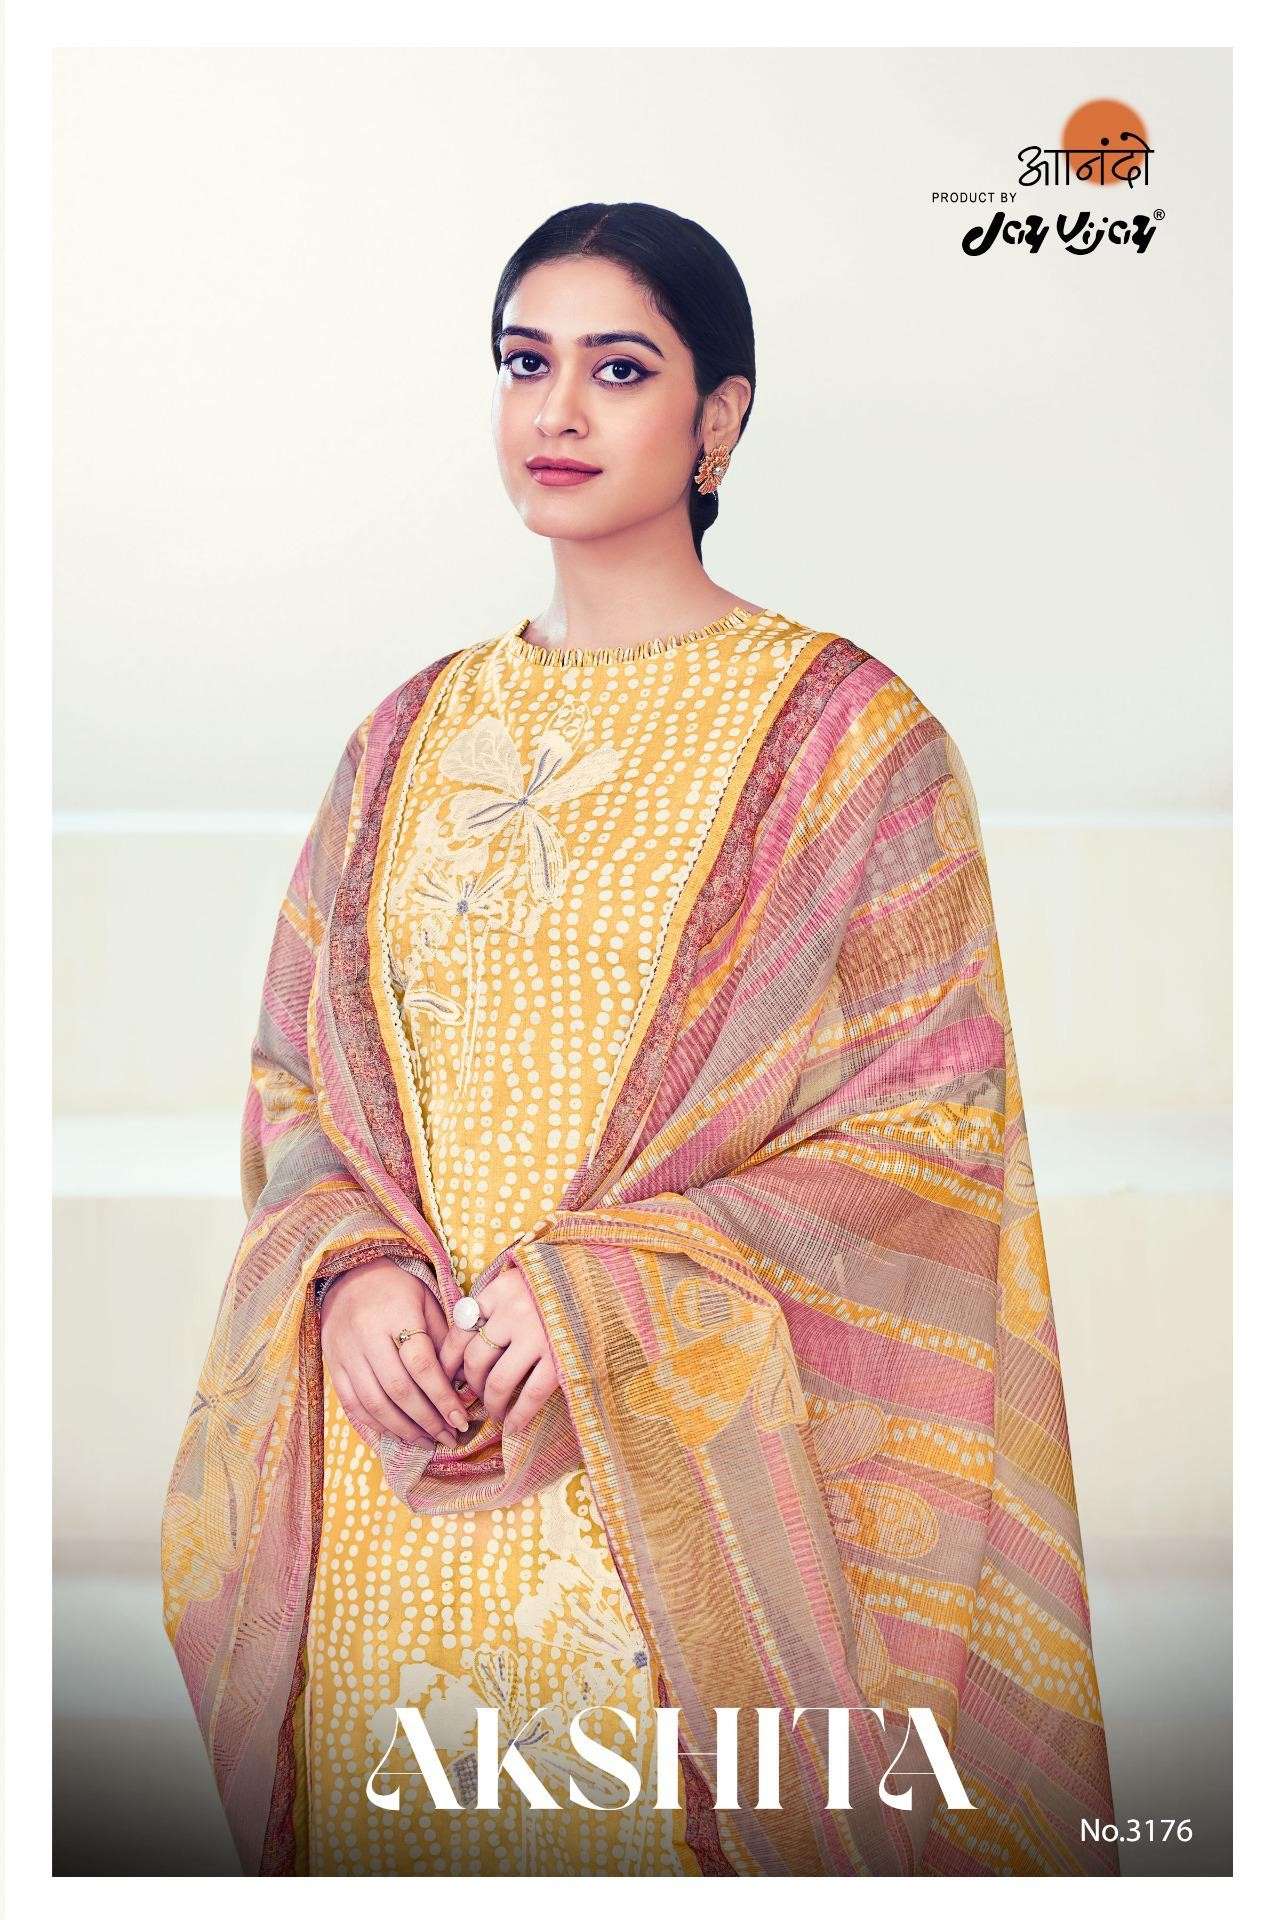 Jay Vijay Anando Akshita 3176 Fancy Block Print Cotton Dress Catalog Wholesales